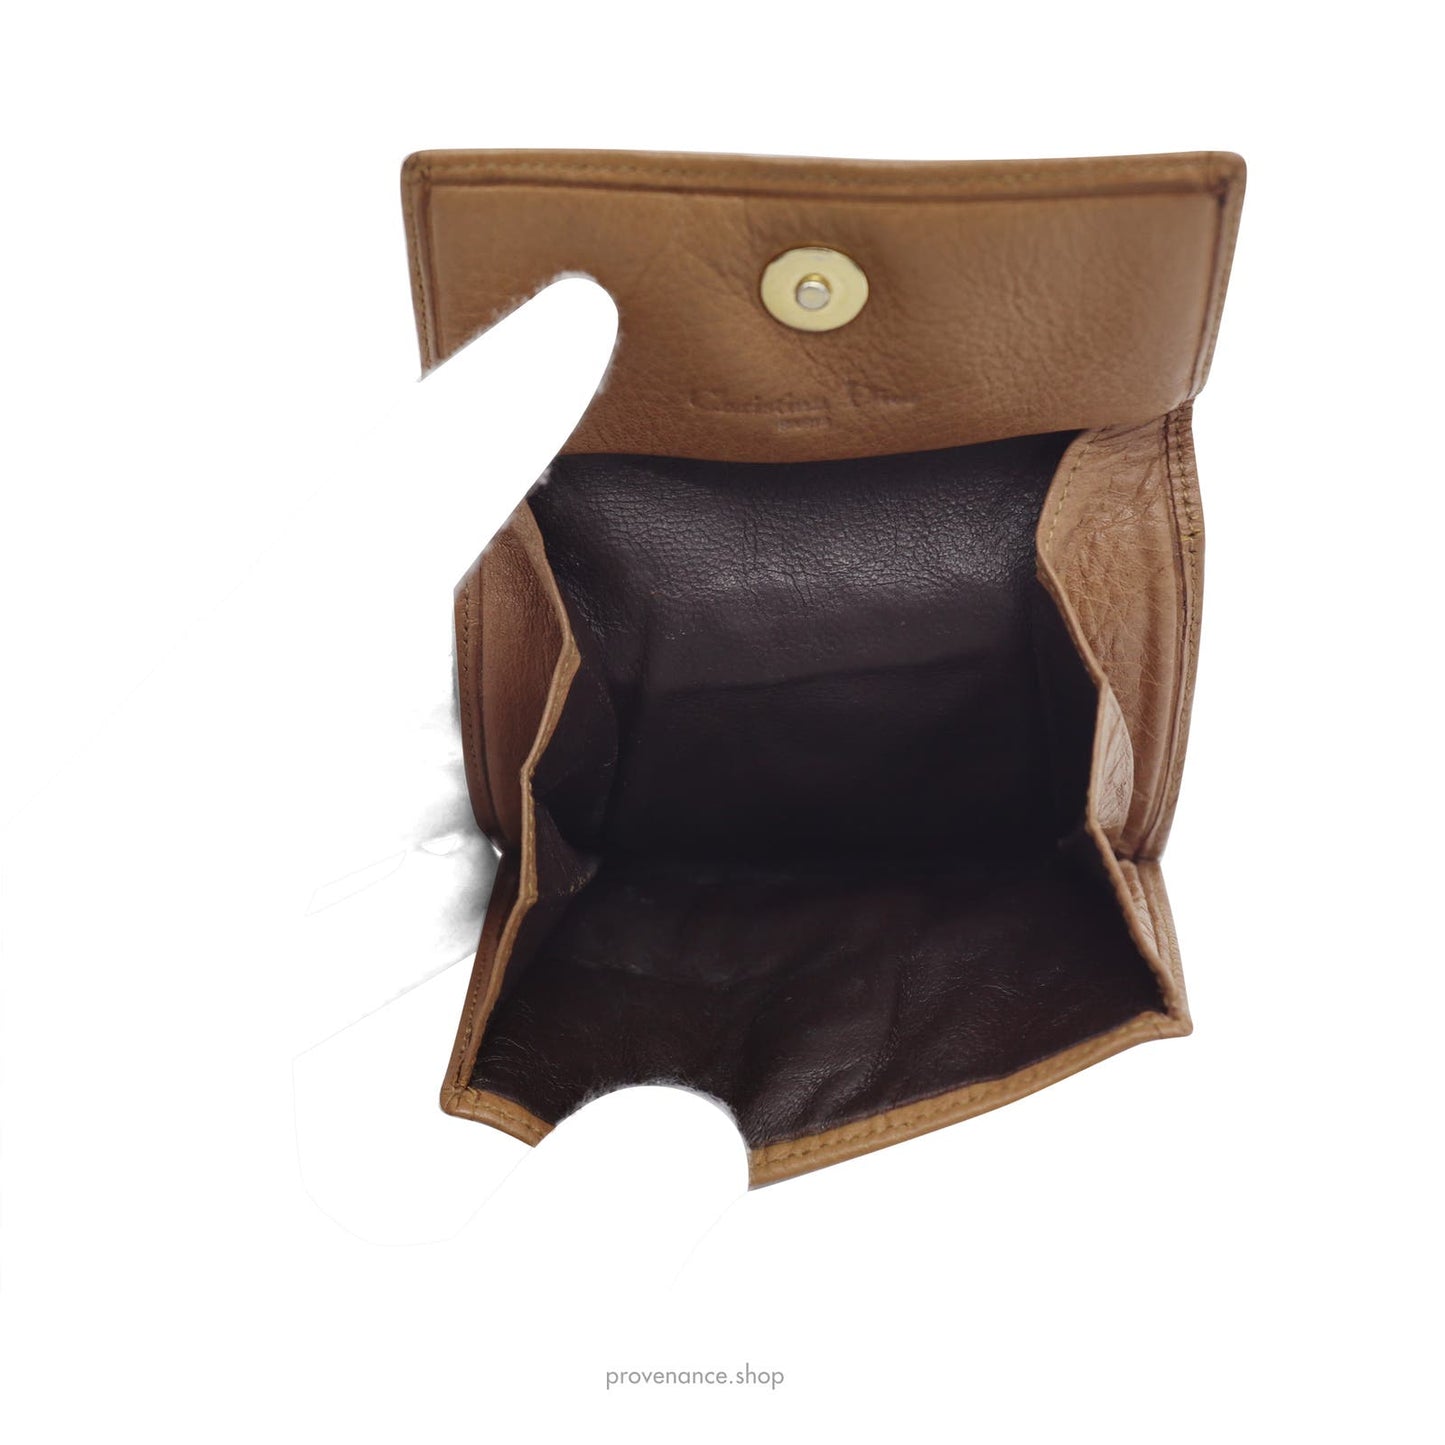 🔴 Dior Snap Wallet - Black Honeycomb Trotter